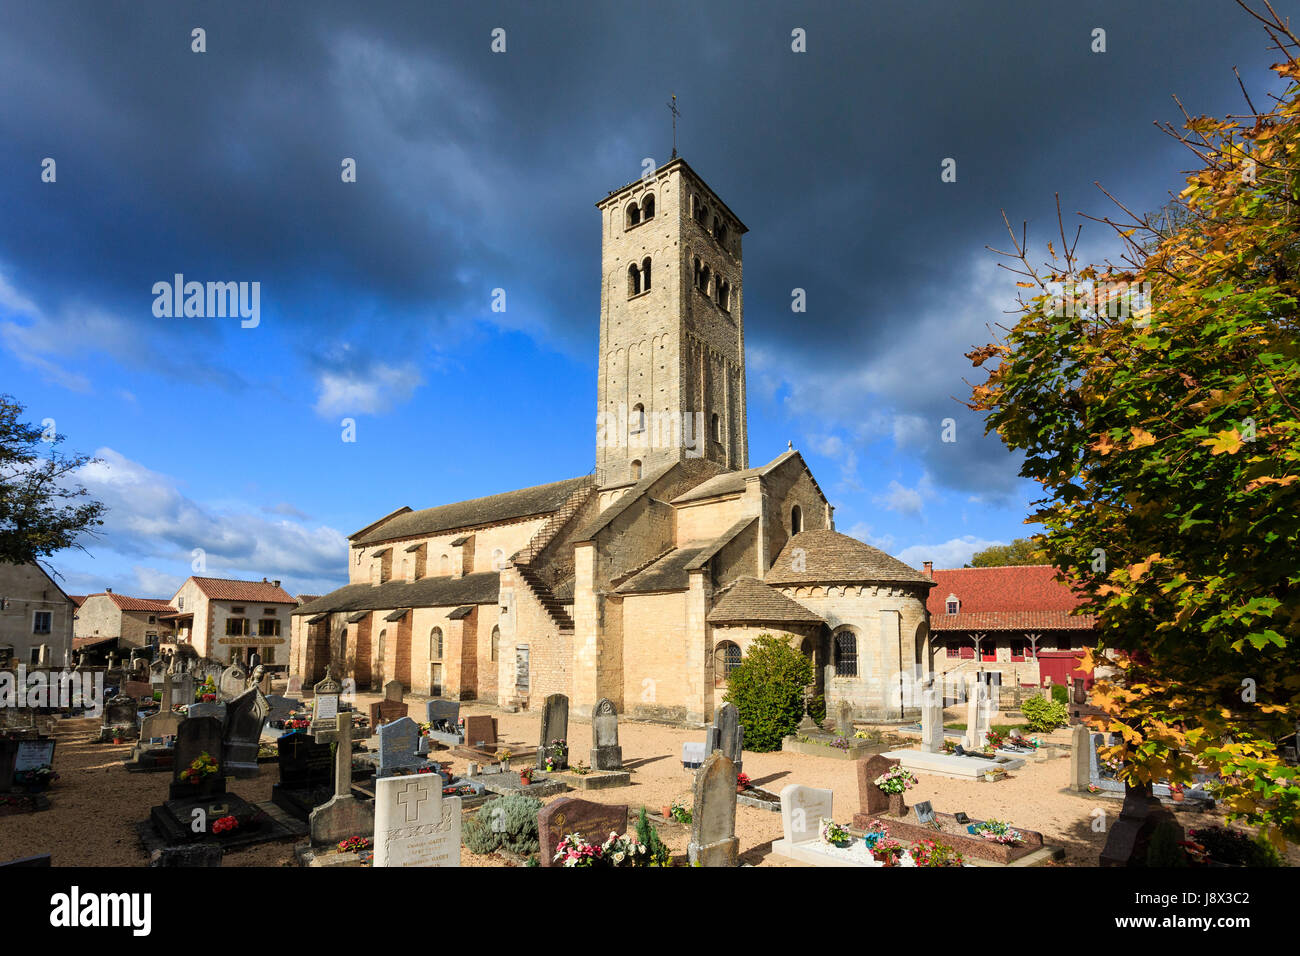 France, Saone et Loire, Chapaize, the church Stock Photo